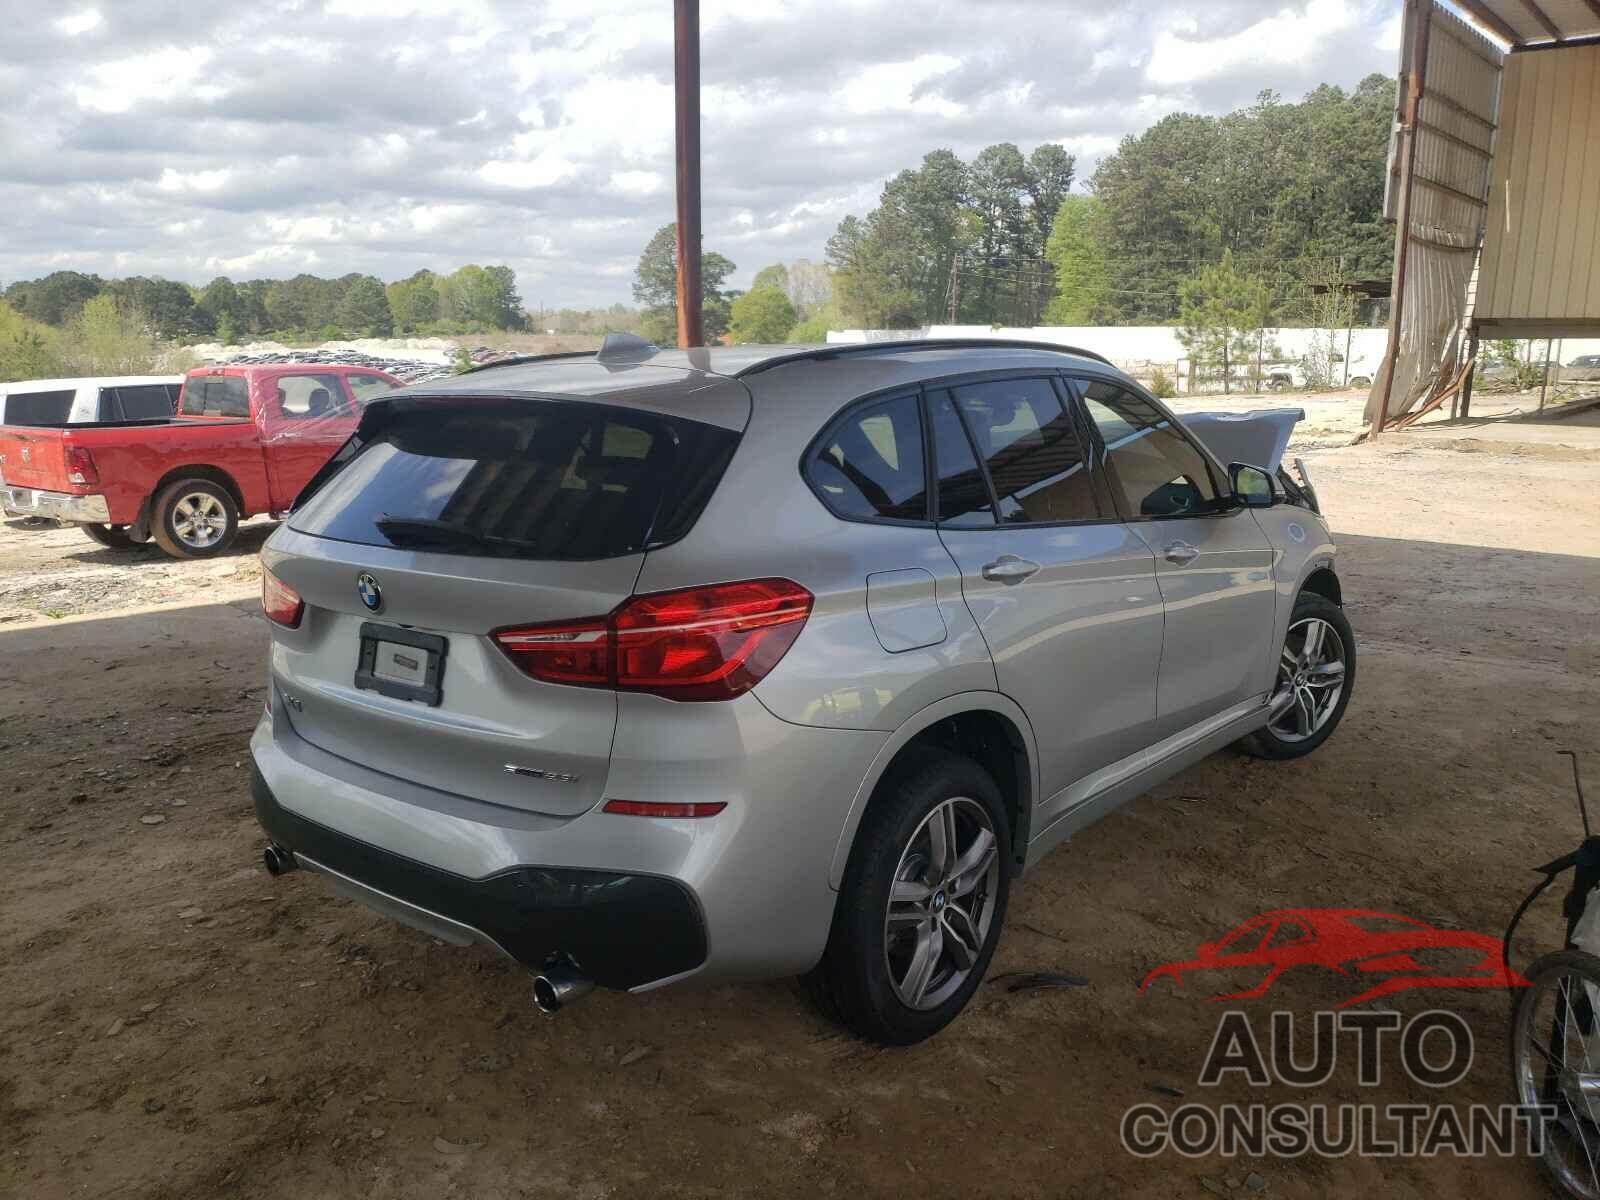 BMW X1 2018 - WBXHU7C30J5L05995